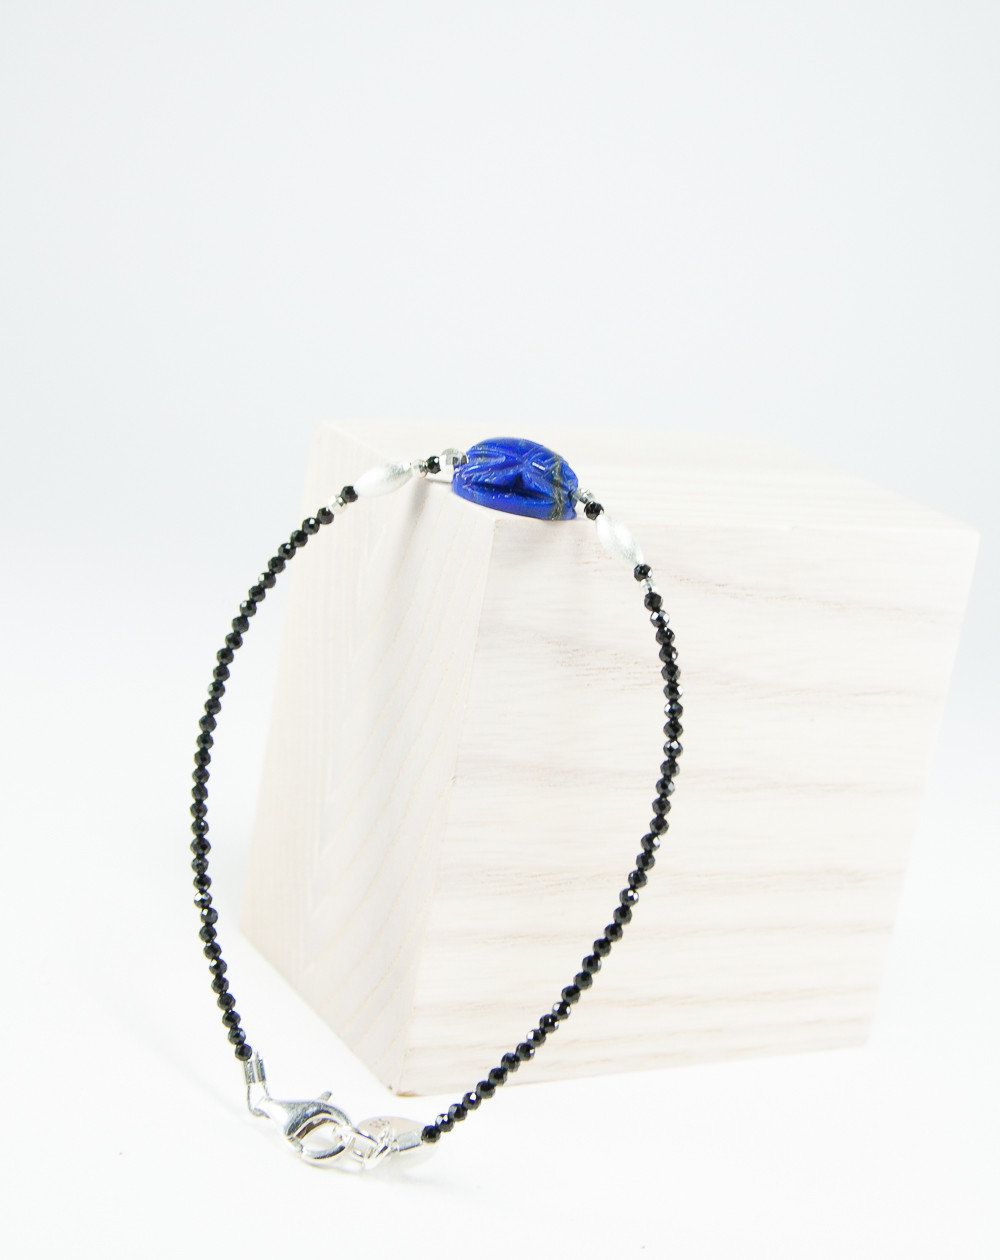 Bracelet Spinelle Scarabée Lapis Lazuli.  Sanuk création. Bayonne